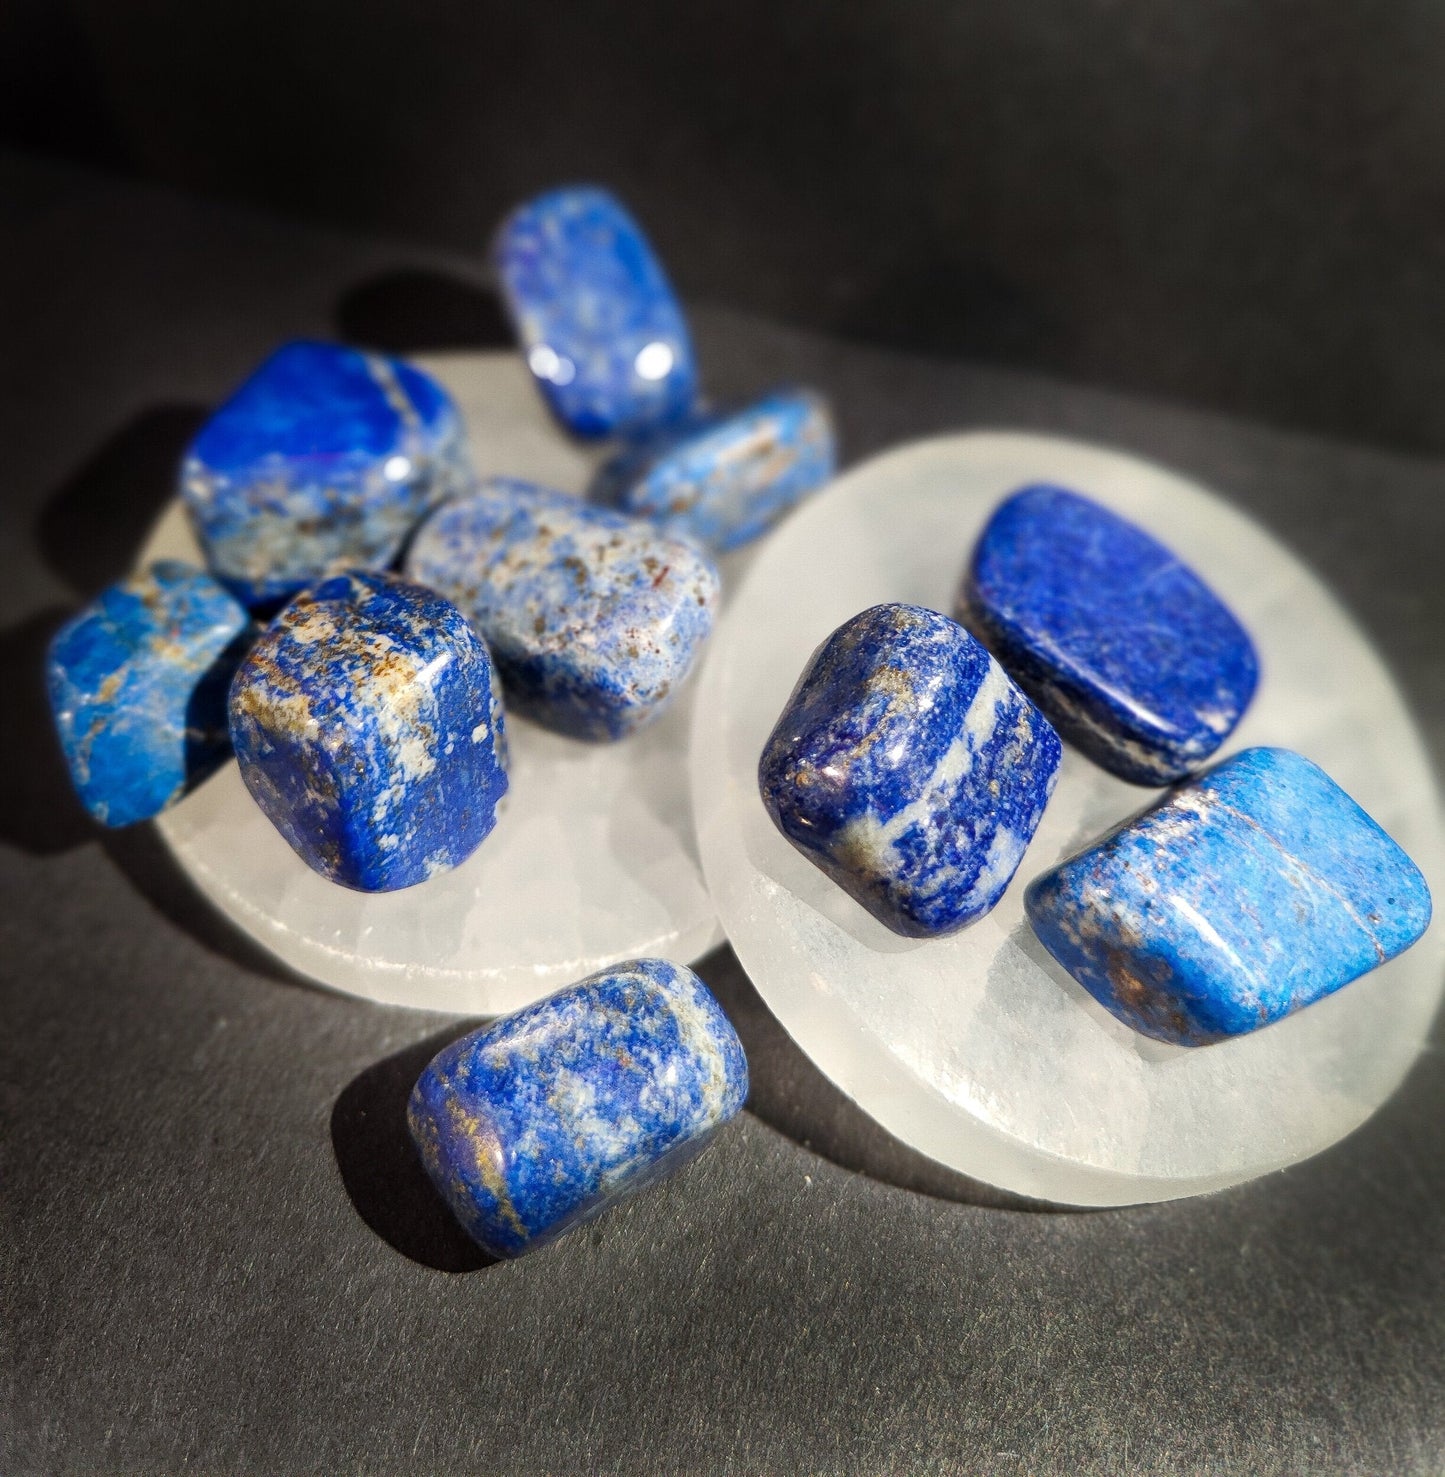 Lapis Lazuli - The Wisdom Stone